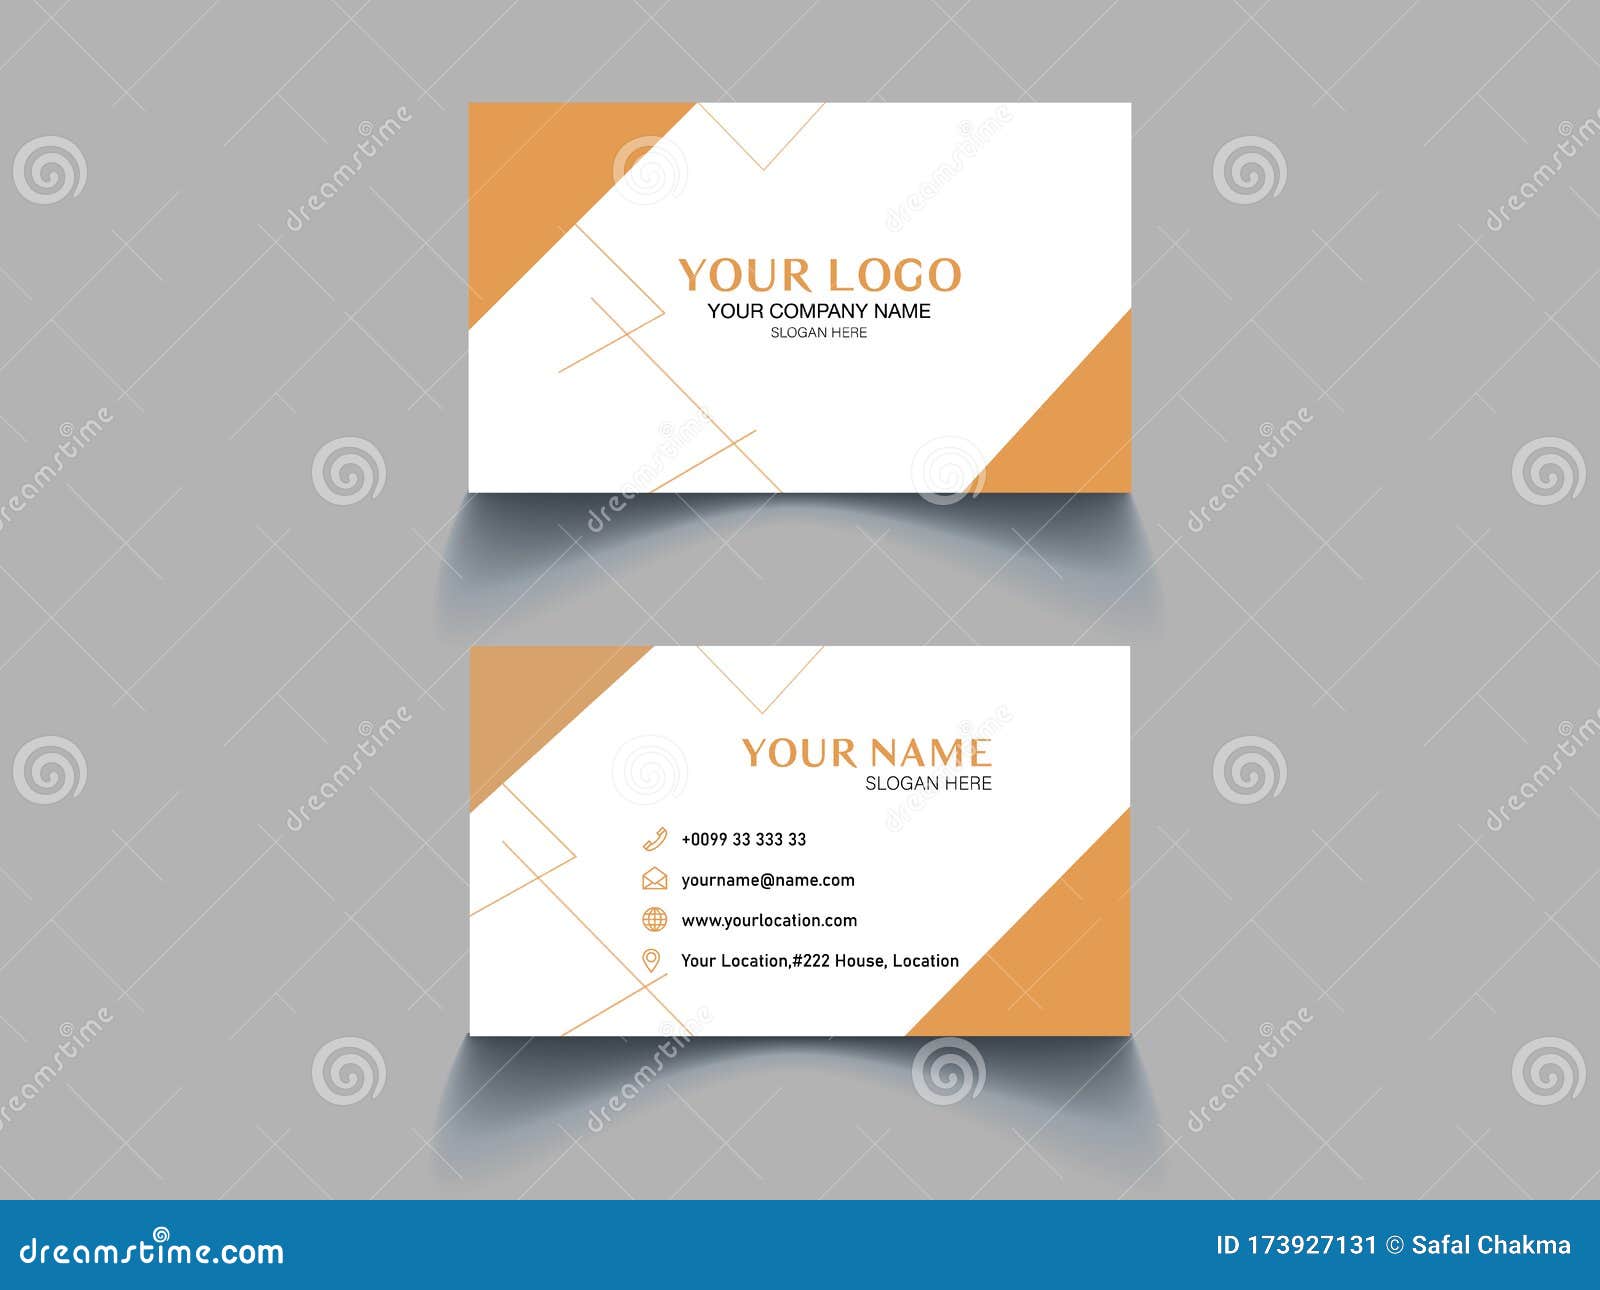 Eye Catching Modern Business Card Design. Stock Vector Regarding Adobe Illustrator Business Card Template